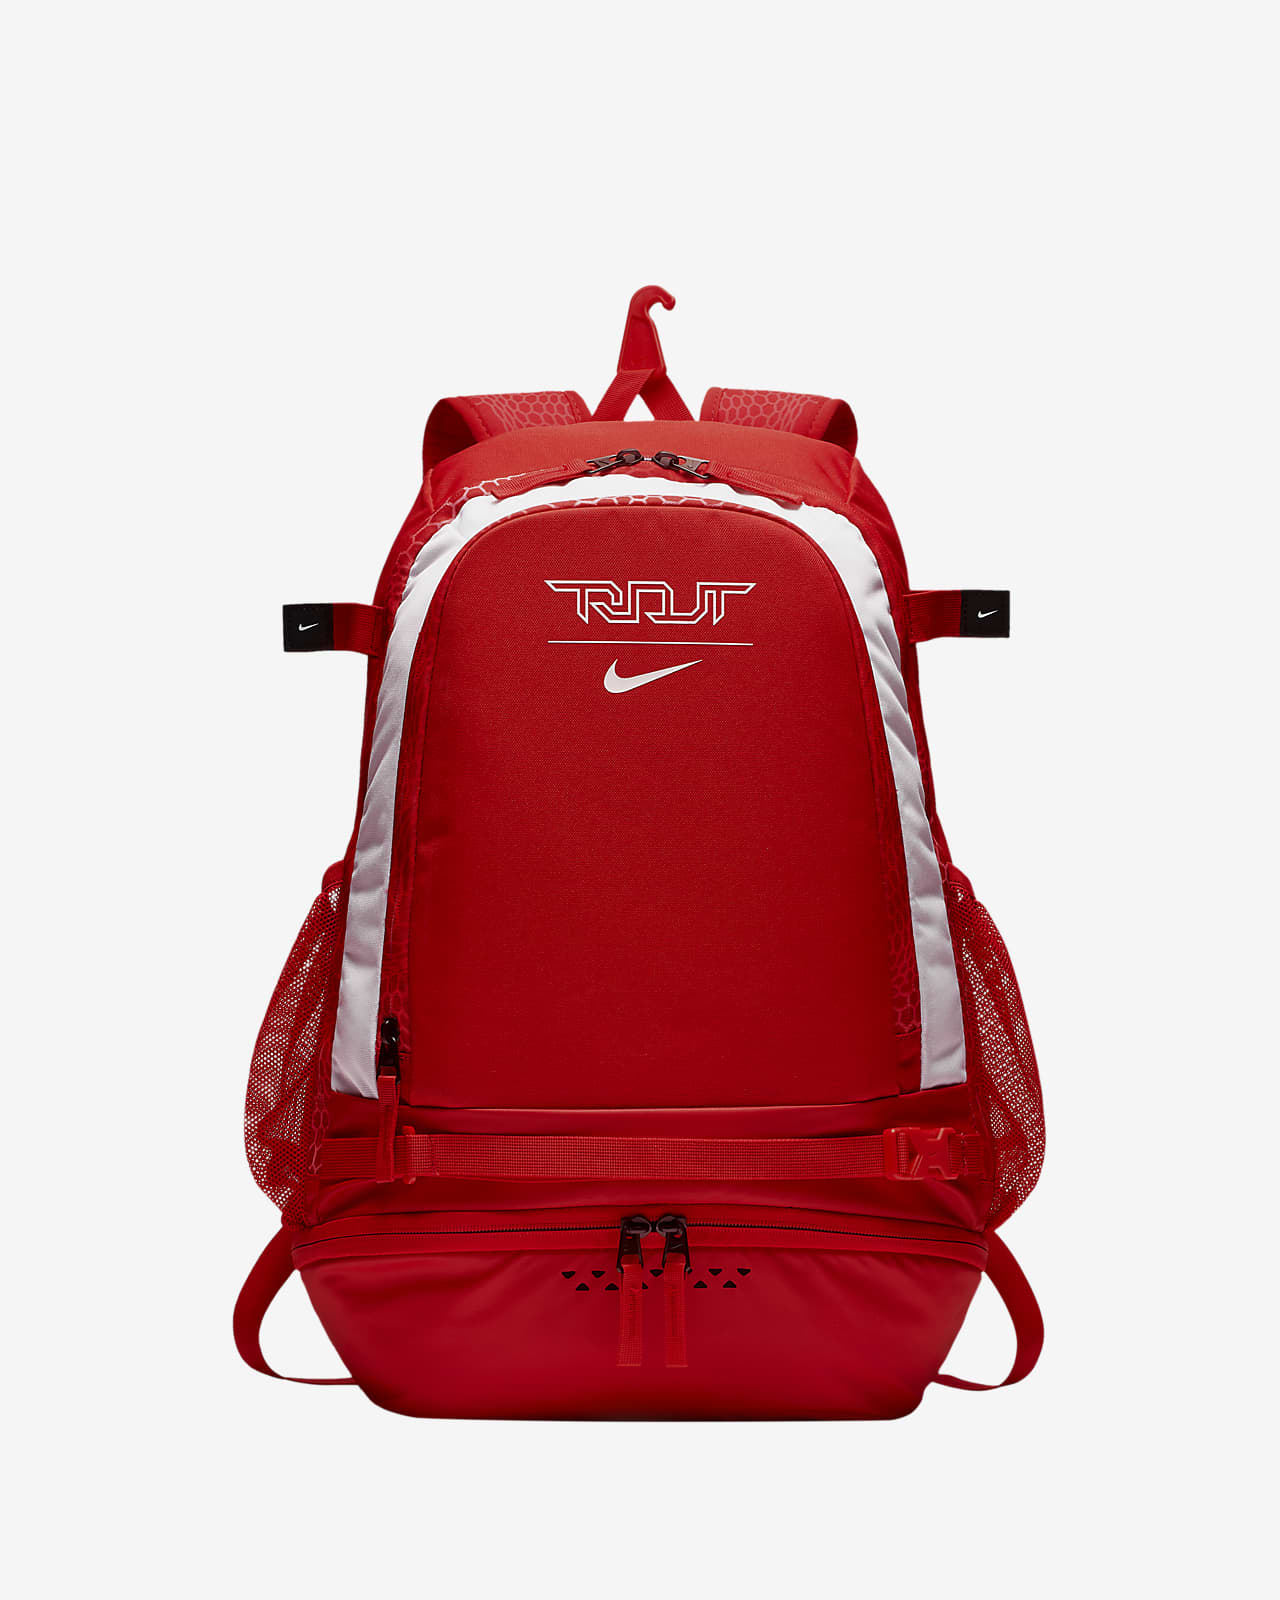 Nike Trout Vapor Baseball Backpack Nike Com